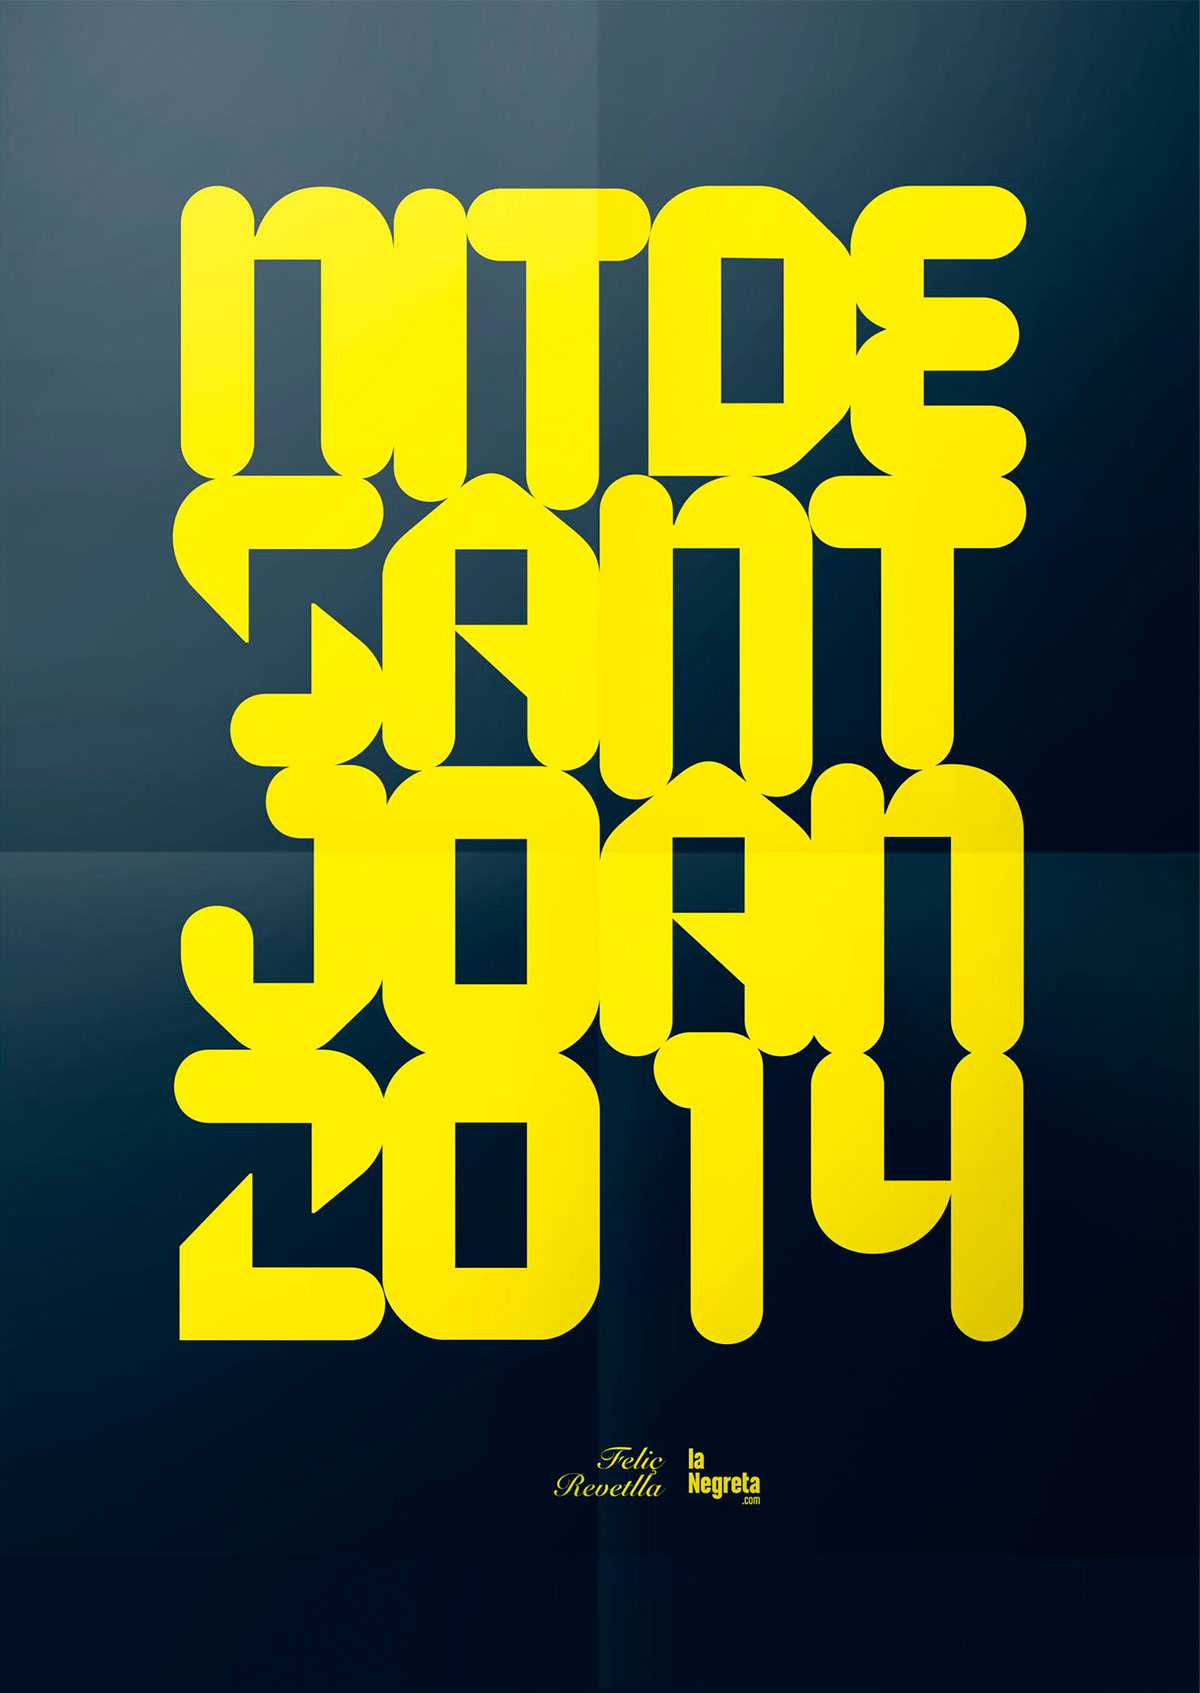 la negreta print poster cartell Disseny gràfic graphicdesign tipografia type Sant Joan comunicació